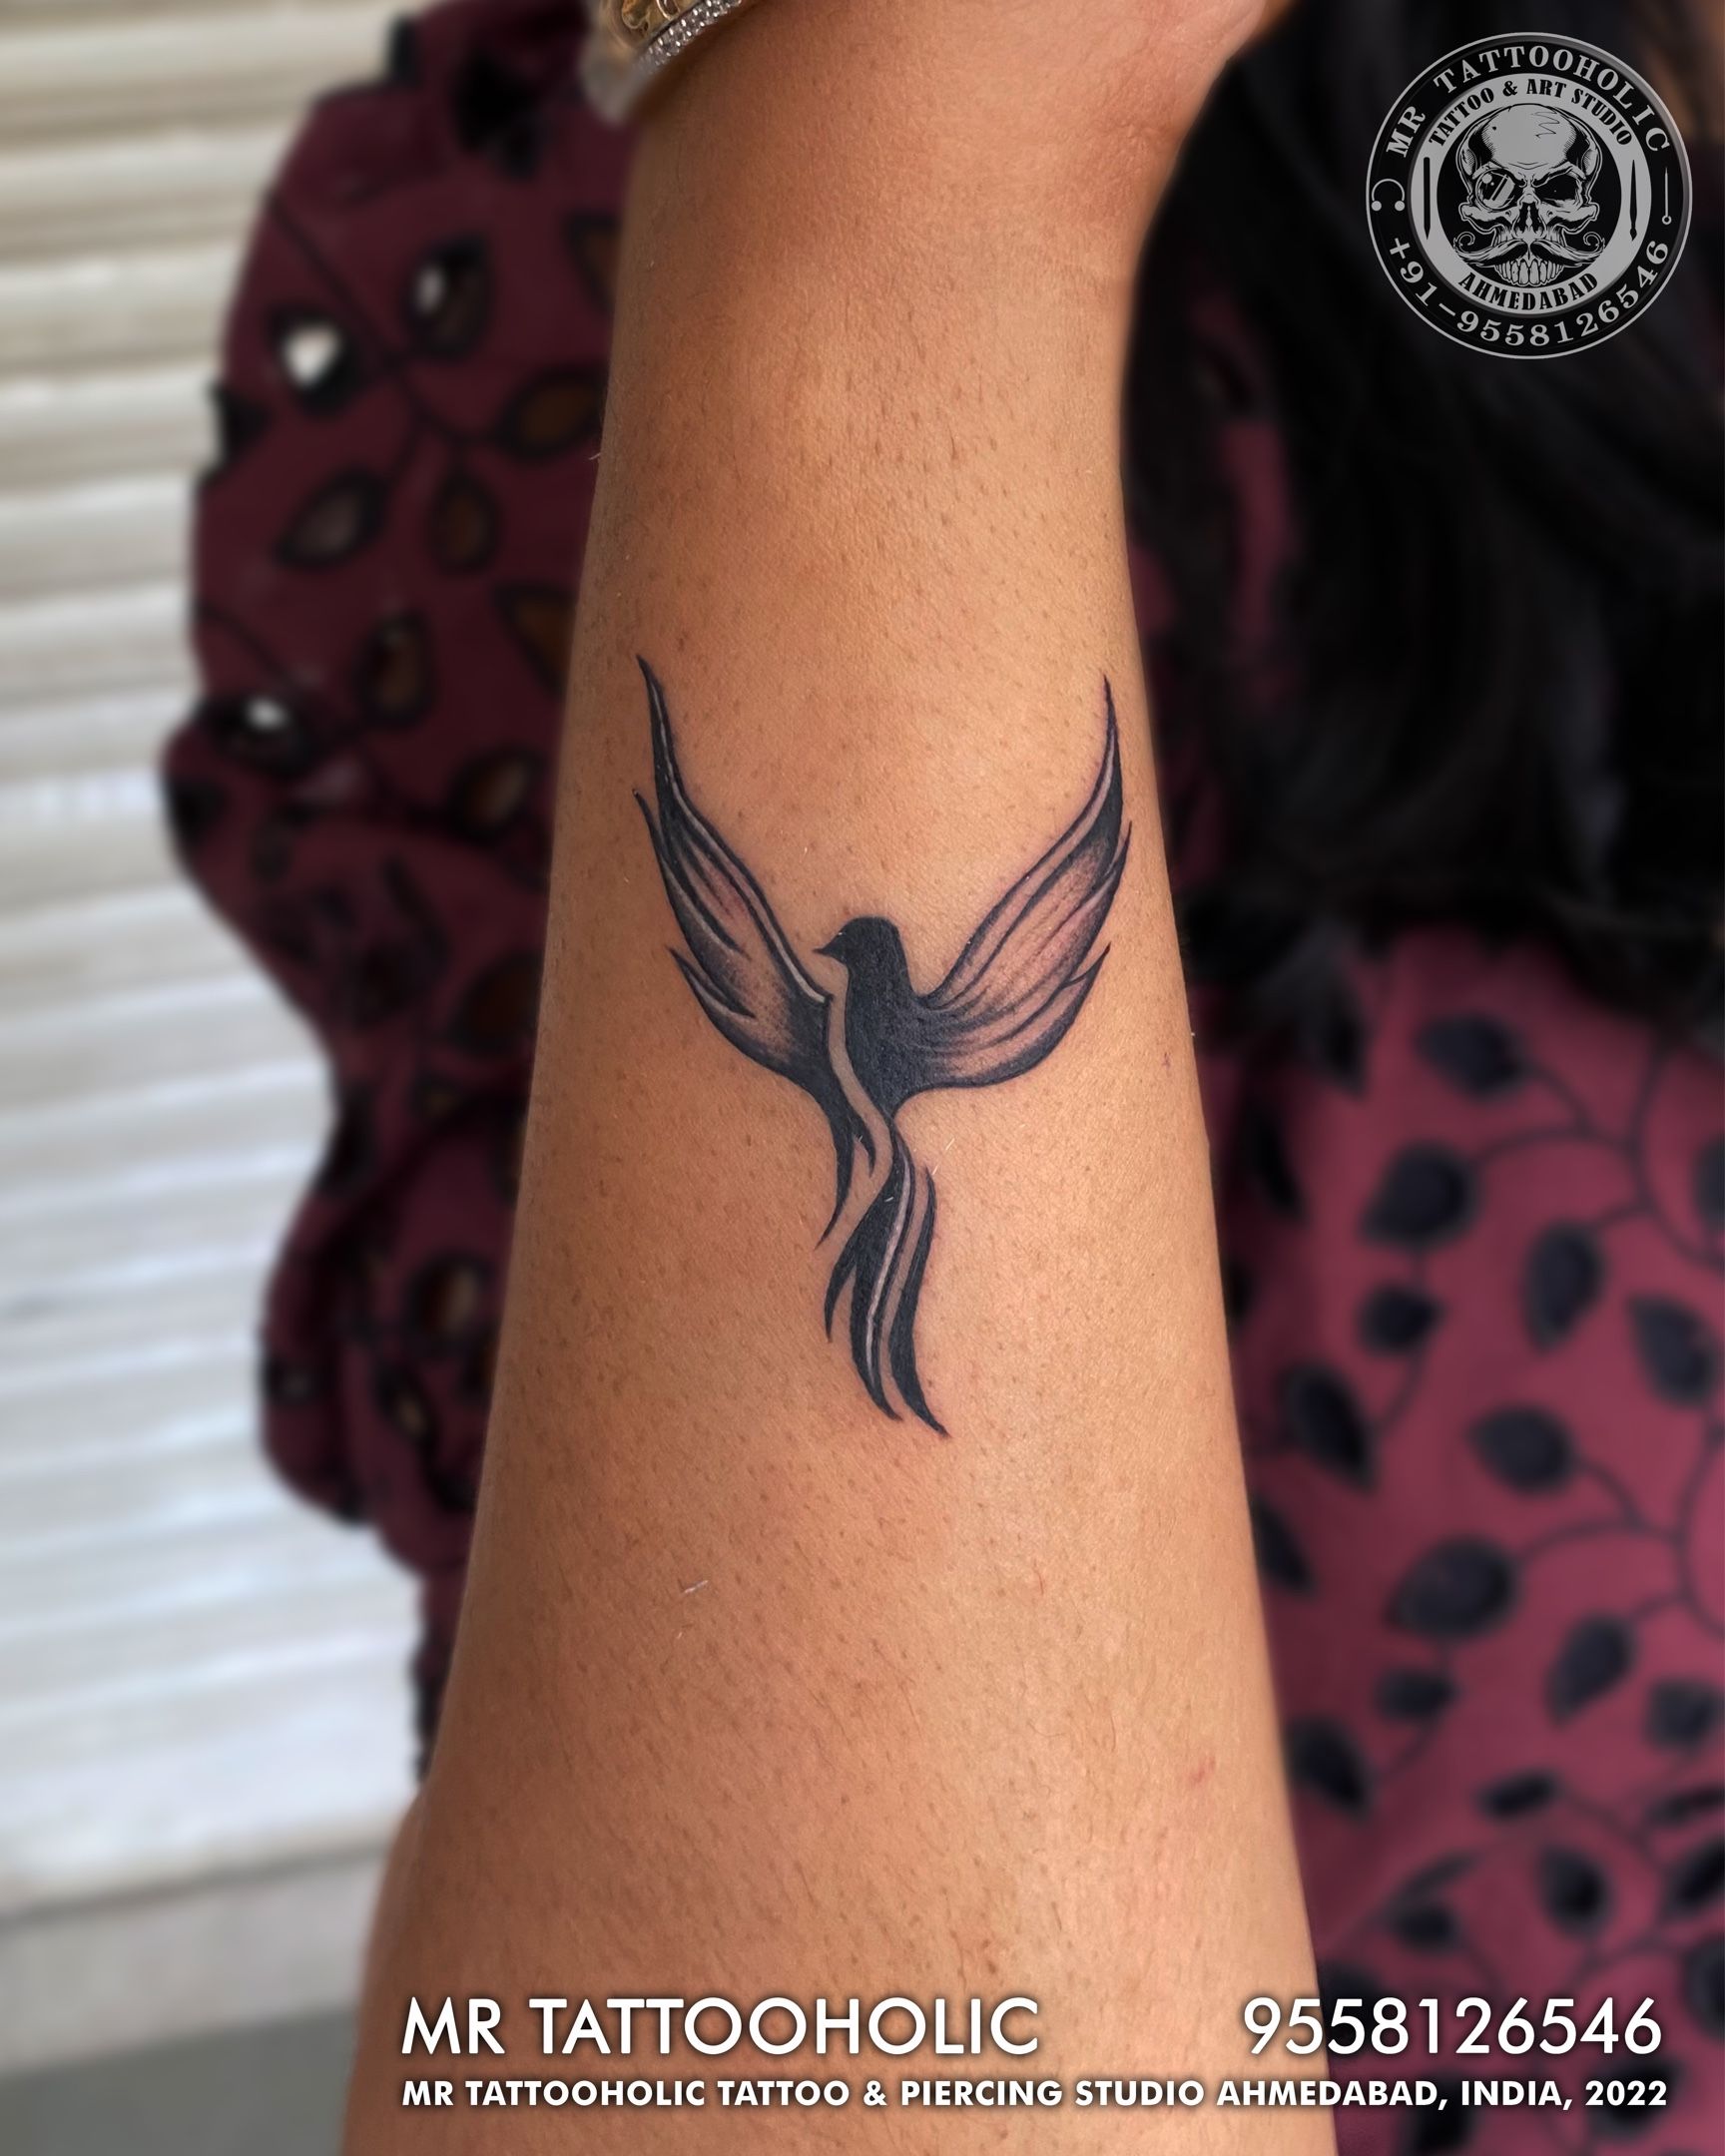 Cute Love Birds Tattoos For Girls 2021  Love Birds Tattoo Designs For  Ladies  Womens Tattoos 2021  YouTube